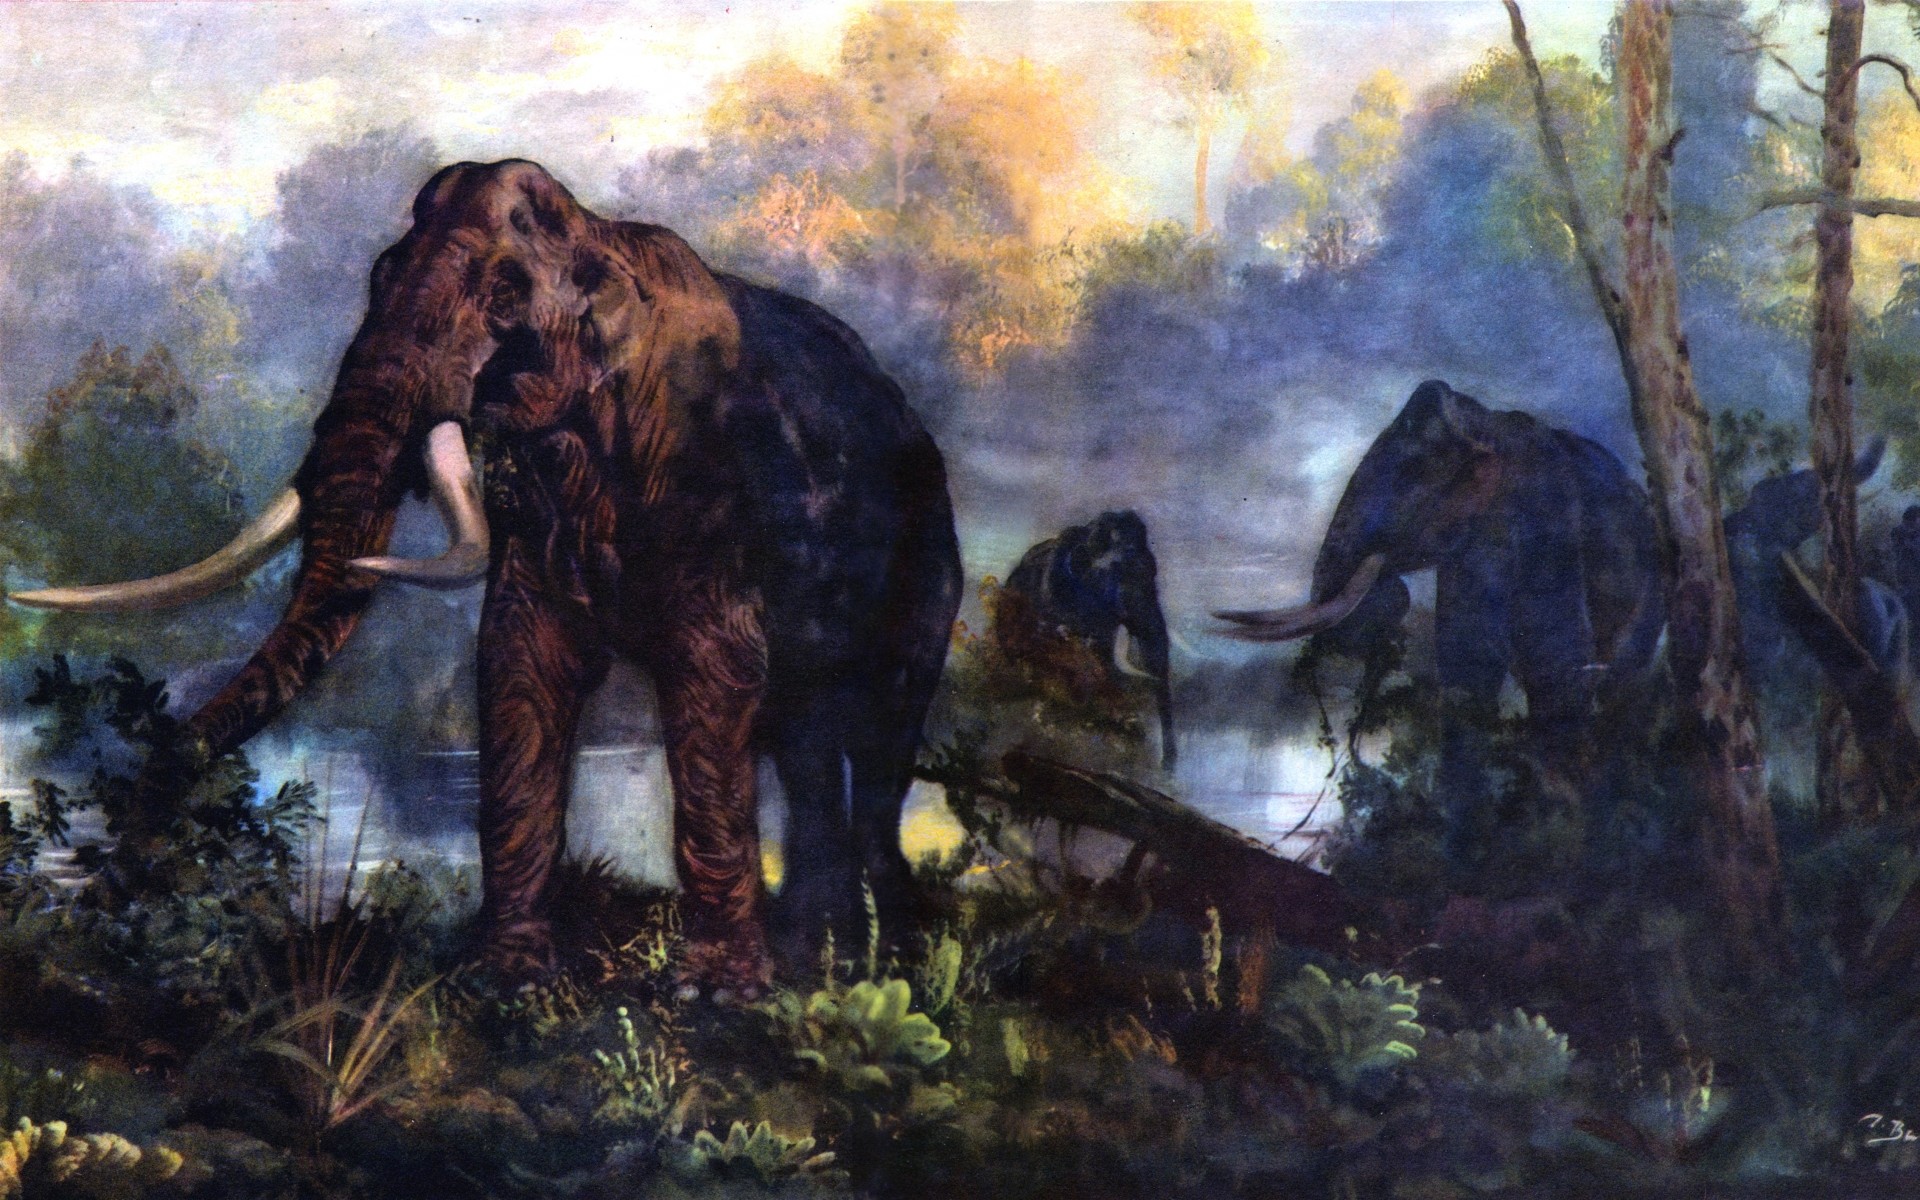 mammoth wallpaper,elephants and mammoths,elephant,terrestrial animal,wildlife,painting